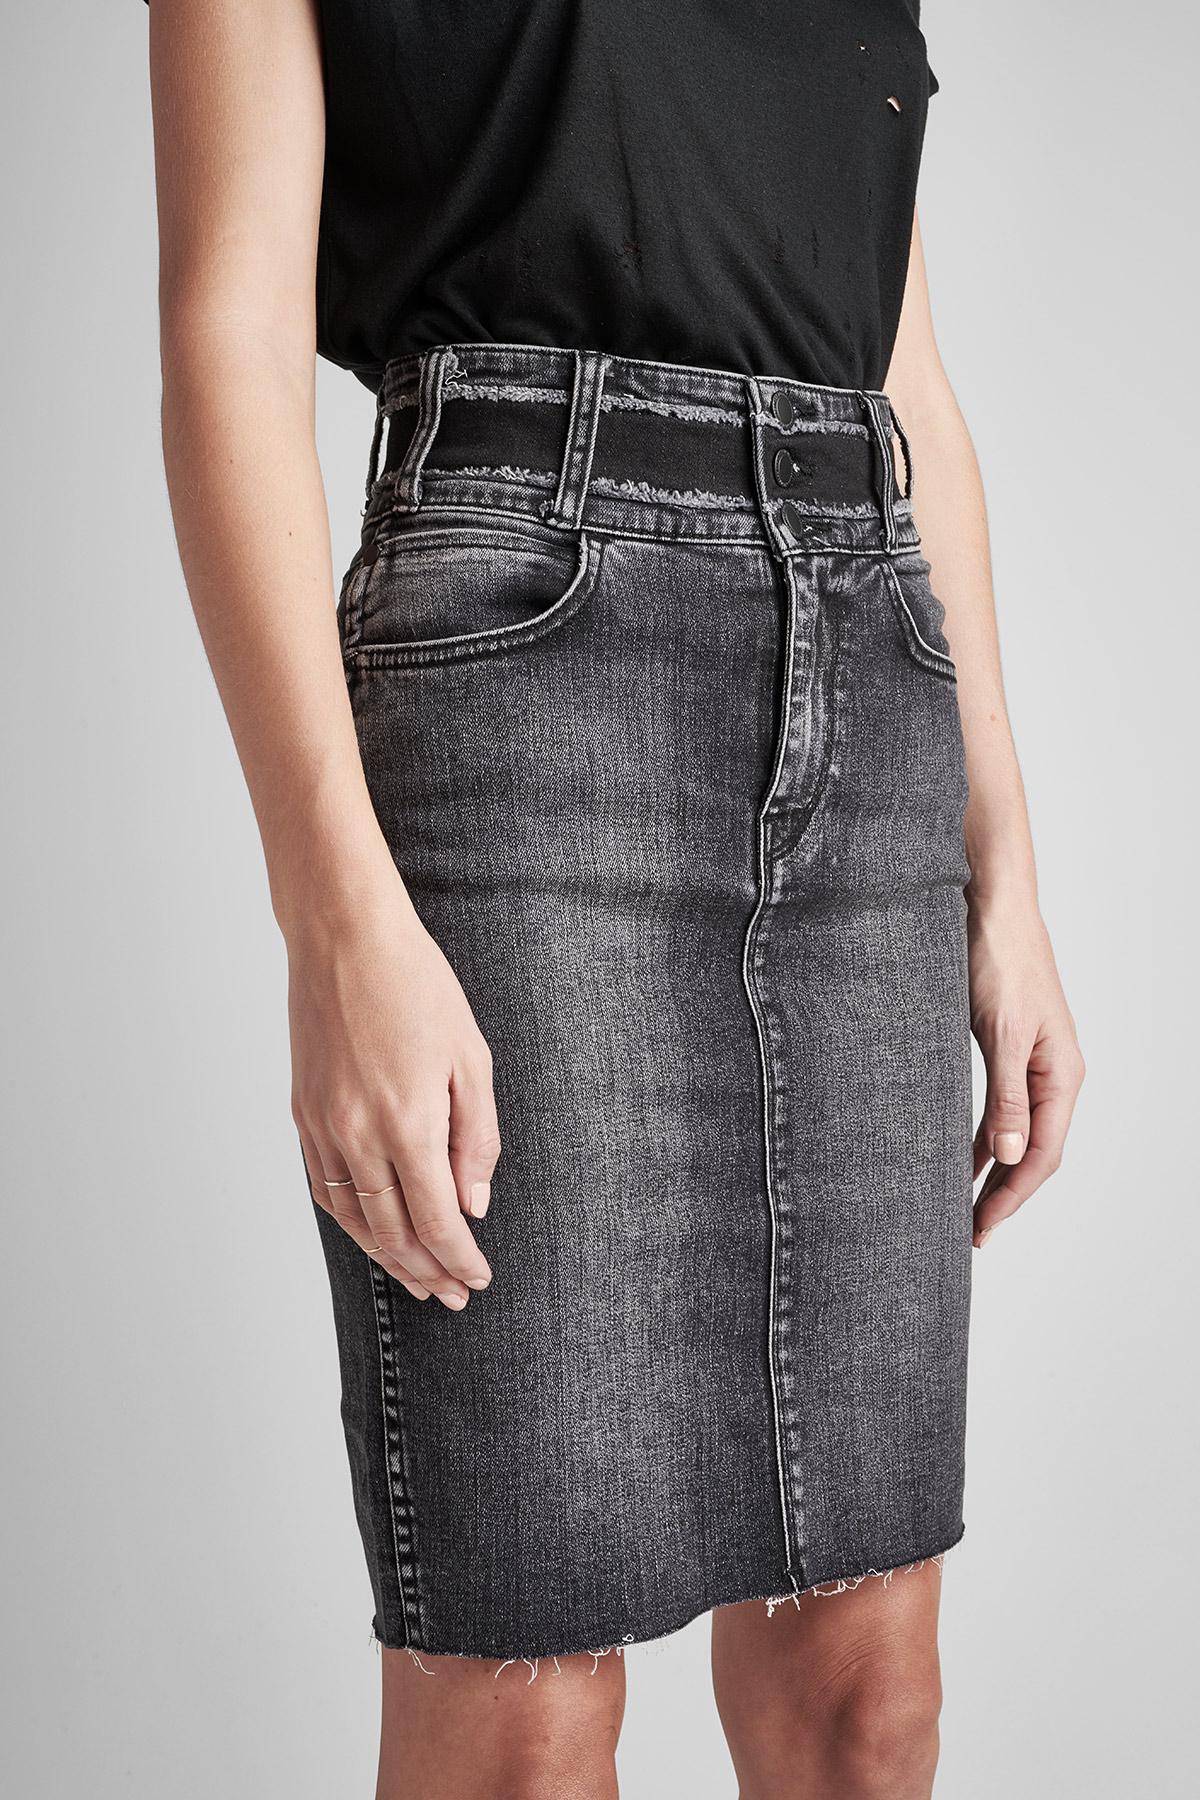 Hudson Jeans Helena High Rise Denim Pencil Skirt in Black - Lyst